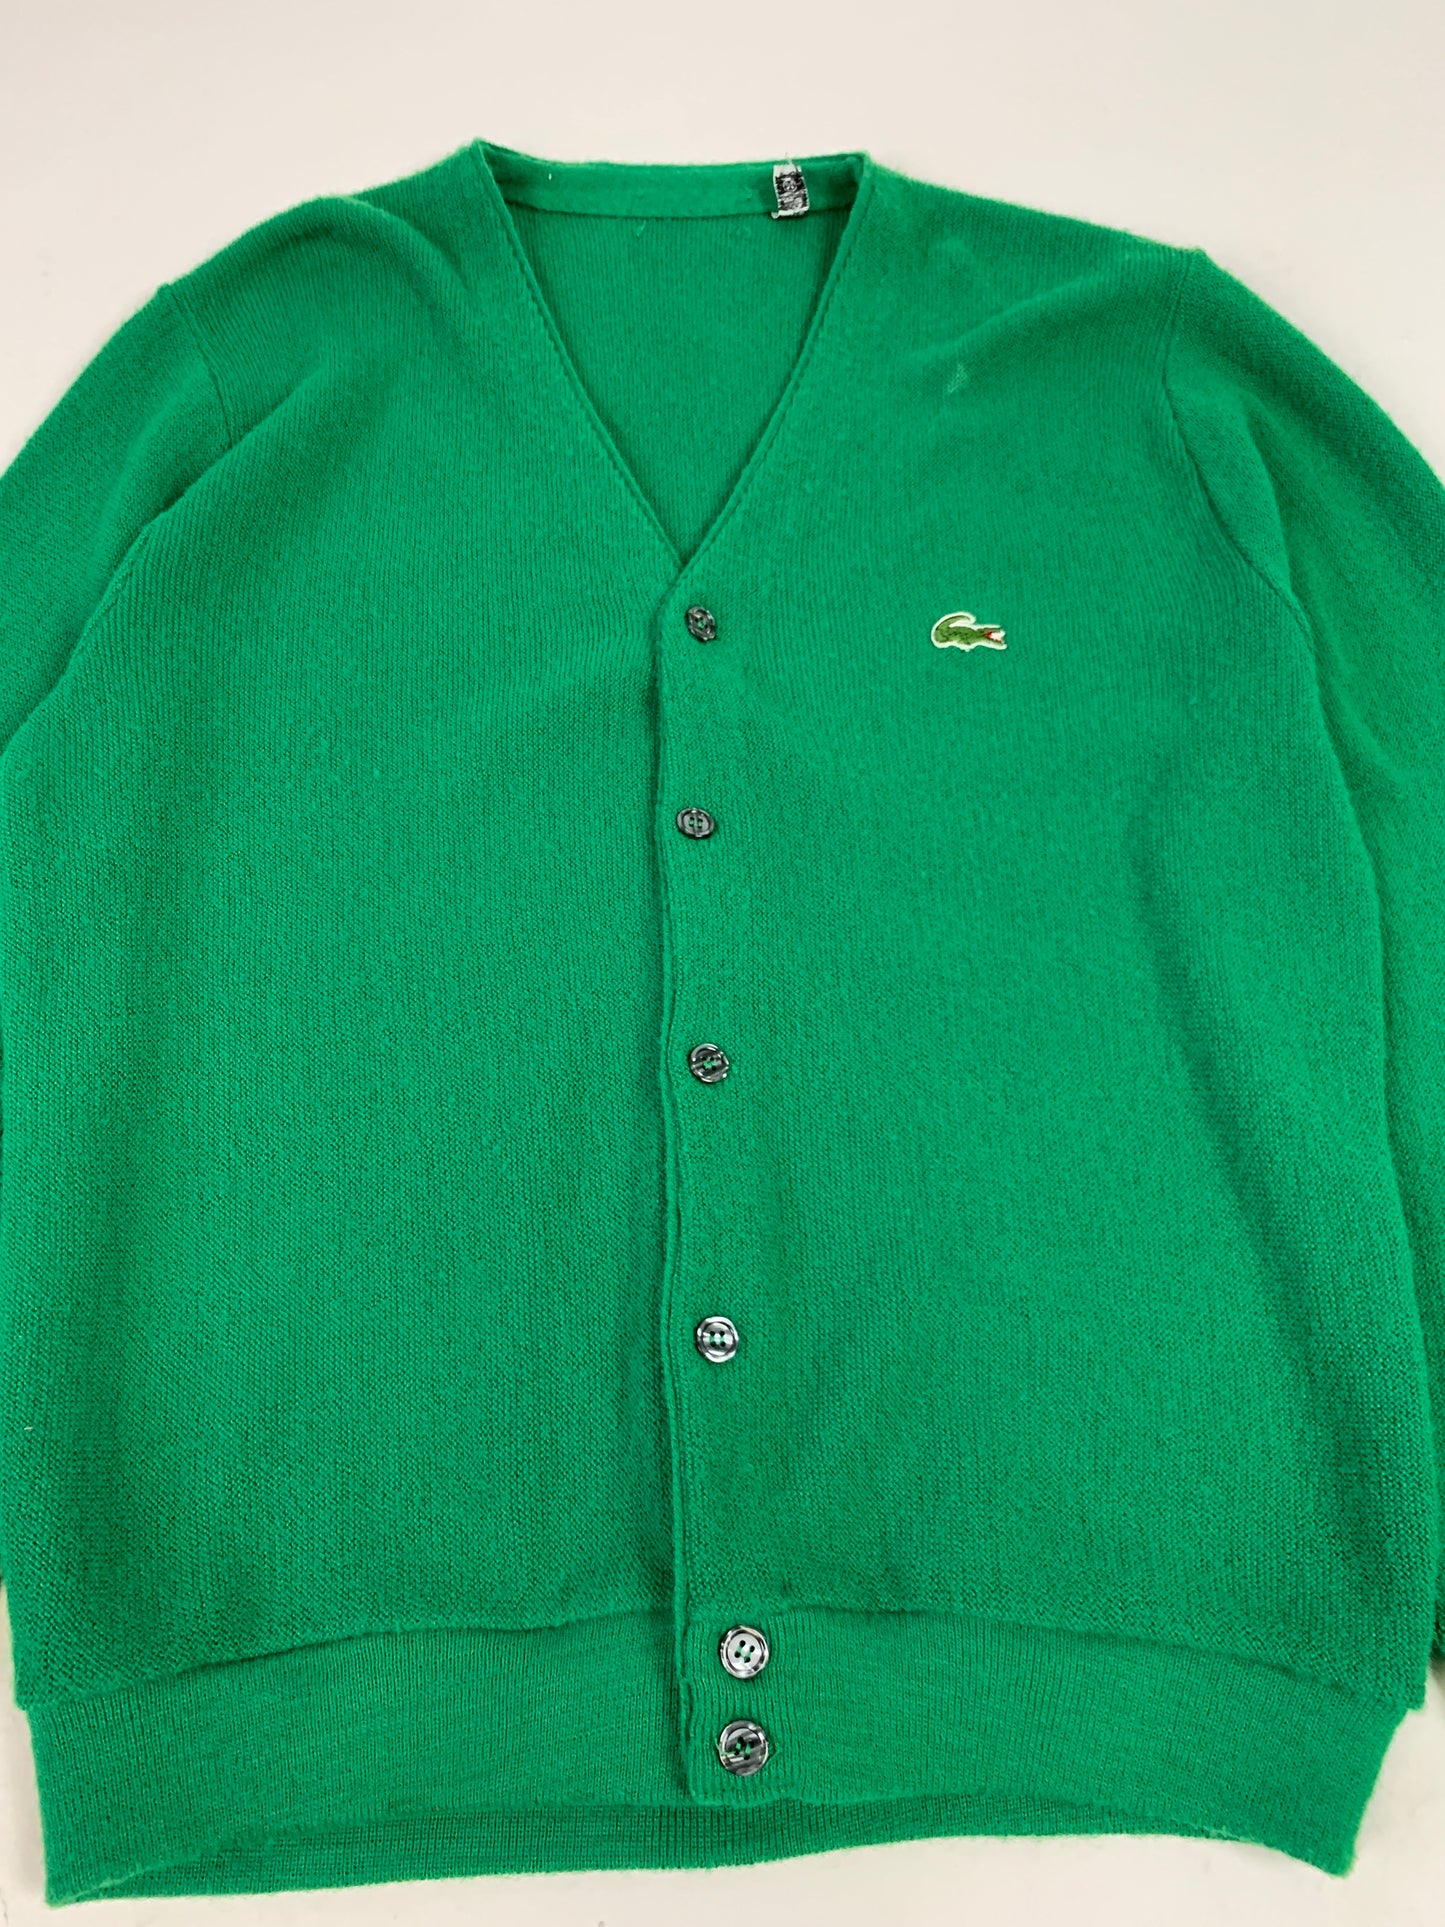 Lacoste Green Vintage Cardigan - L